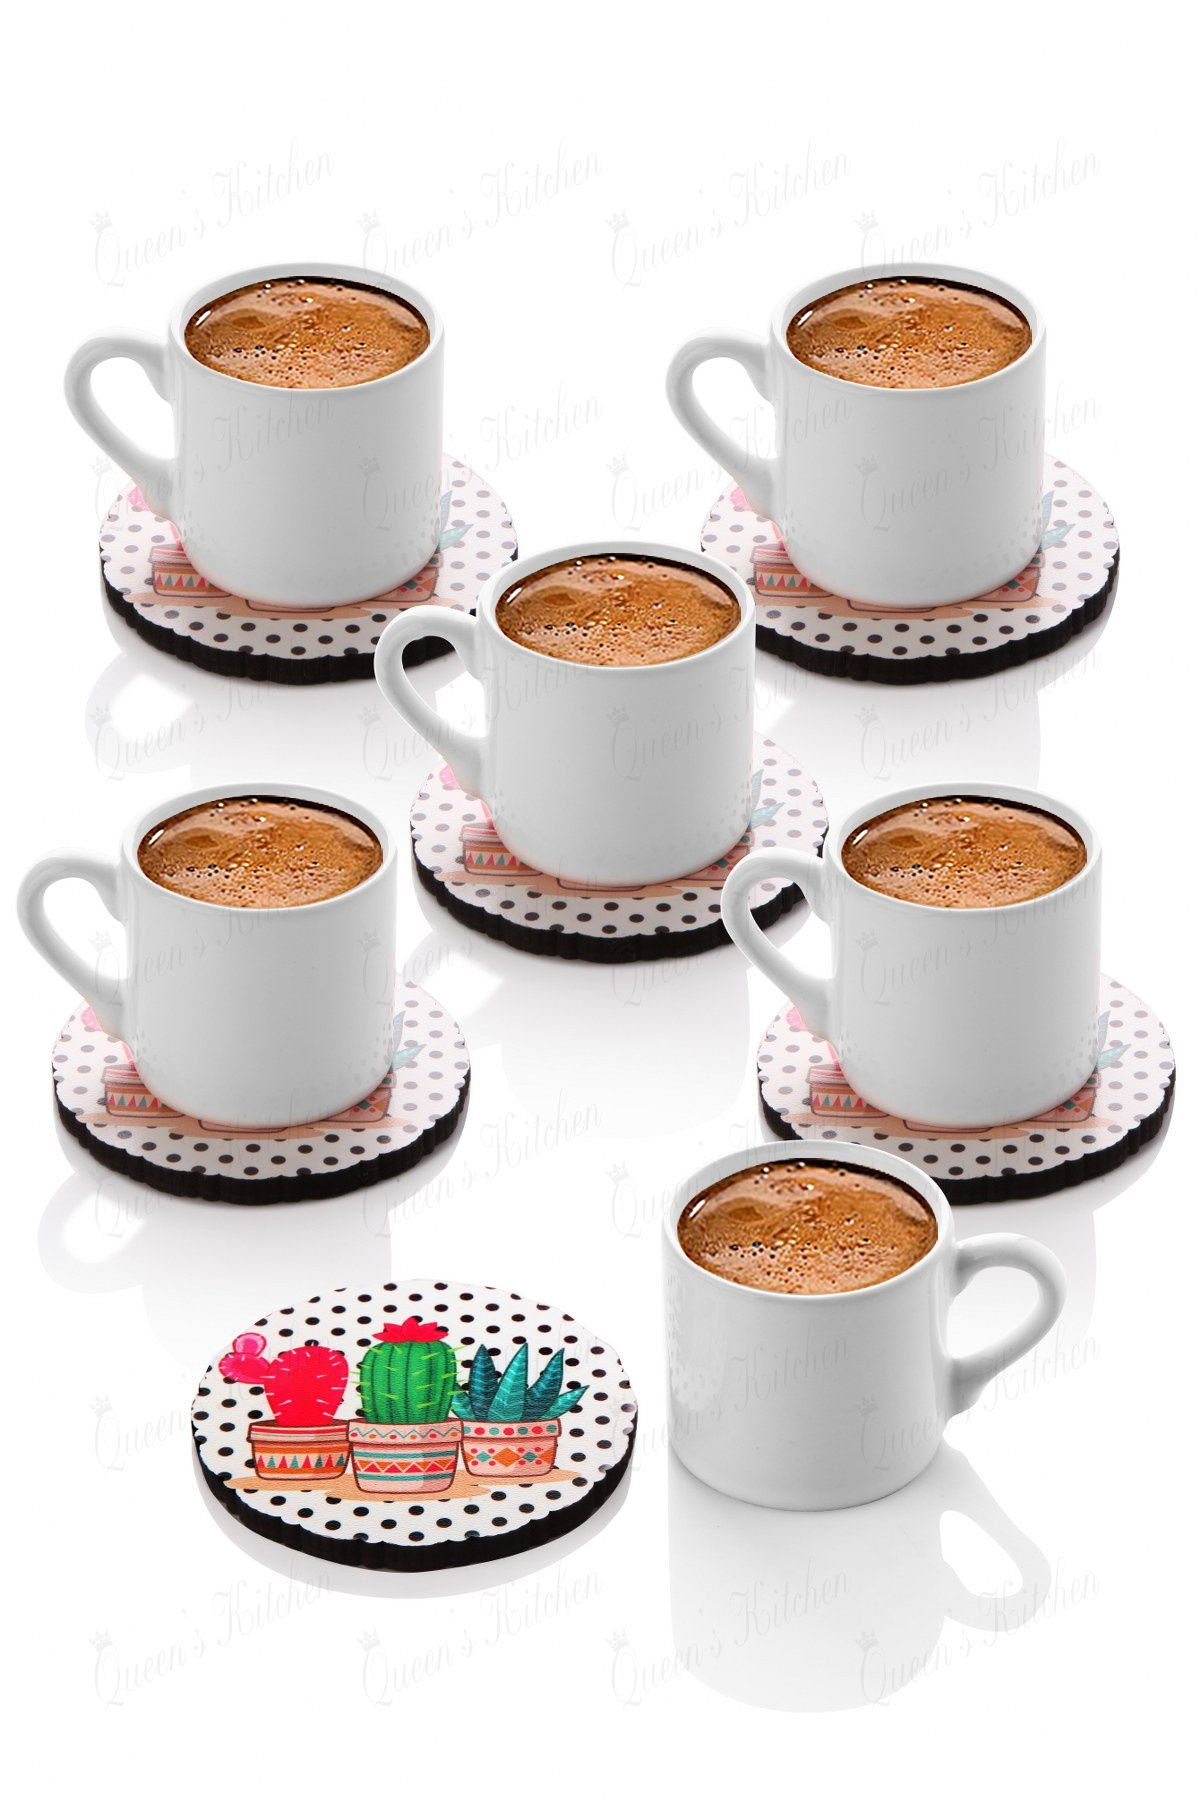 Hermia Concept Tasse Kaffeetassen, RWE2504, Keramik Bunt, 100